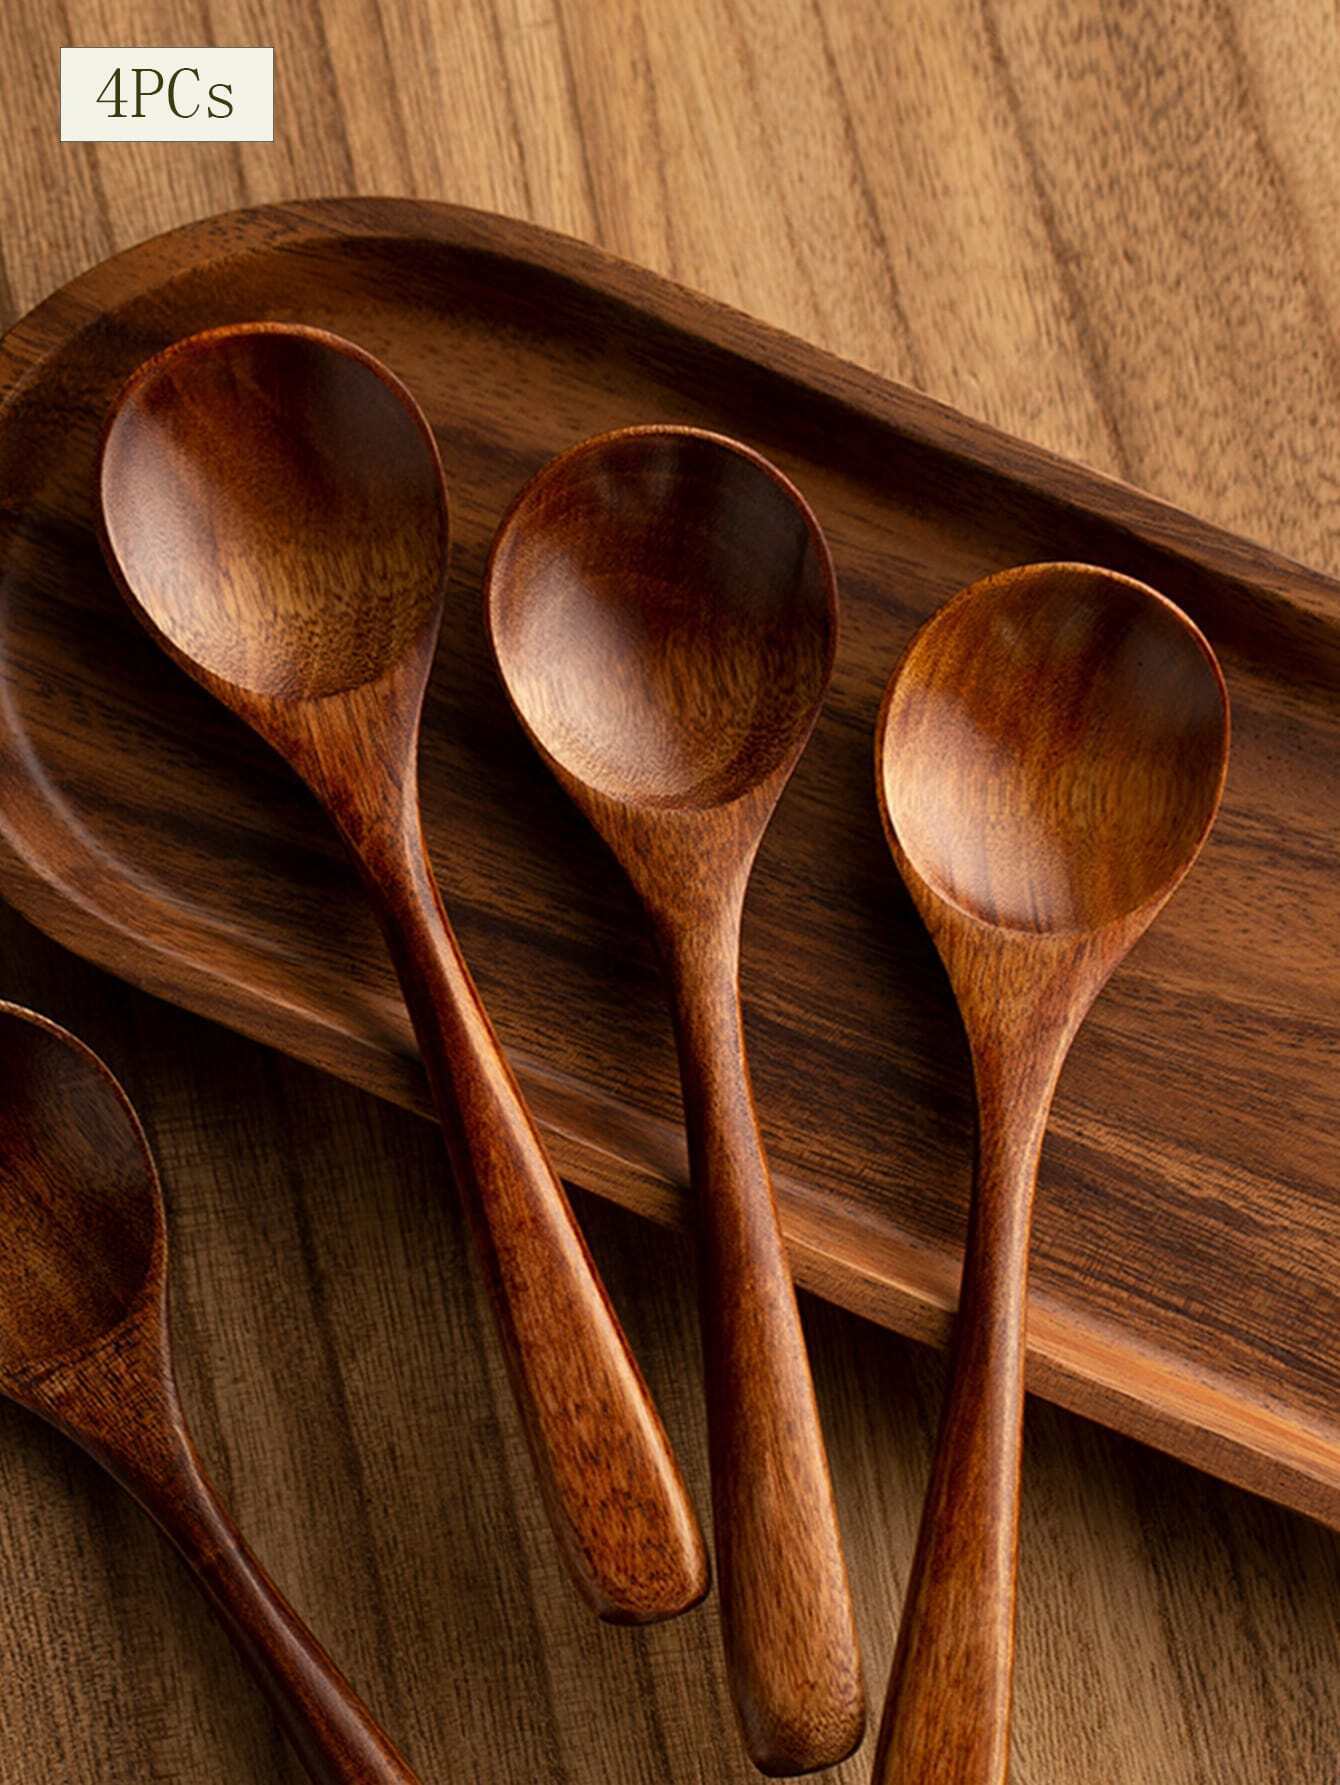 4pcs Wooden Spoon,Delicate Wooden Vintage Spoon